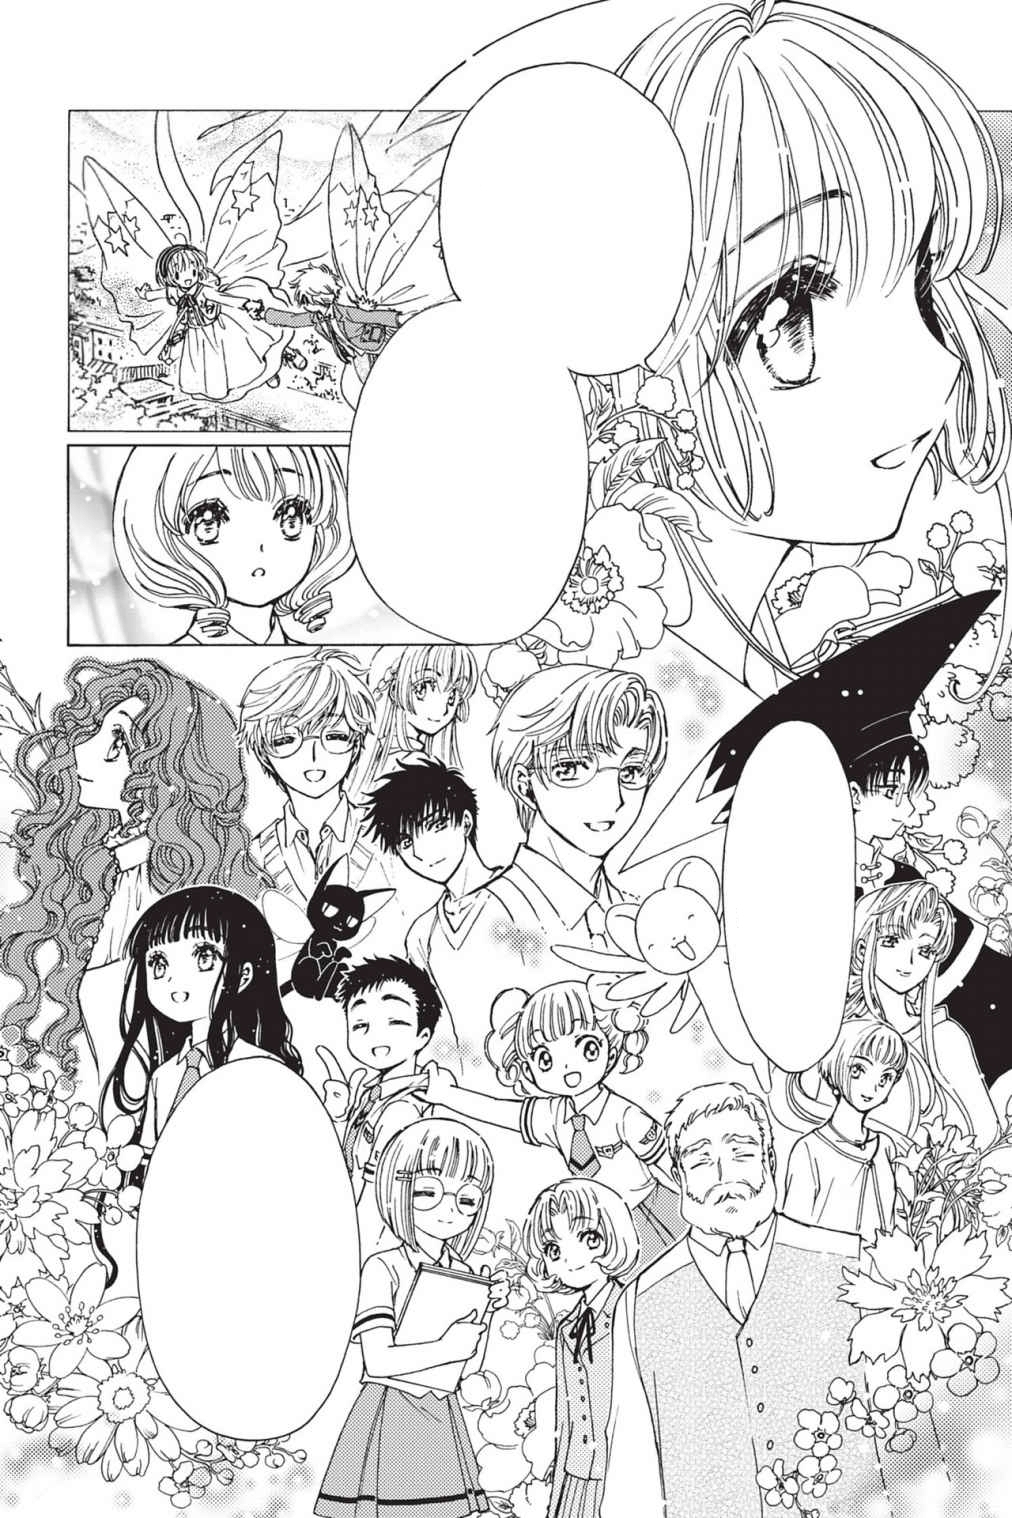 Cardcaptor Sakura et autres mangas [CLAMP] - Page 2 Cardca11